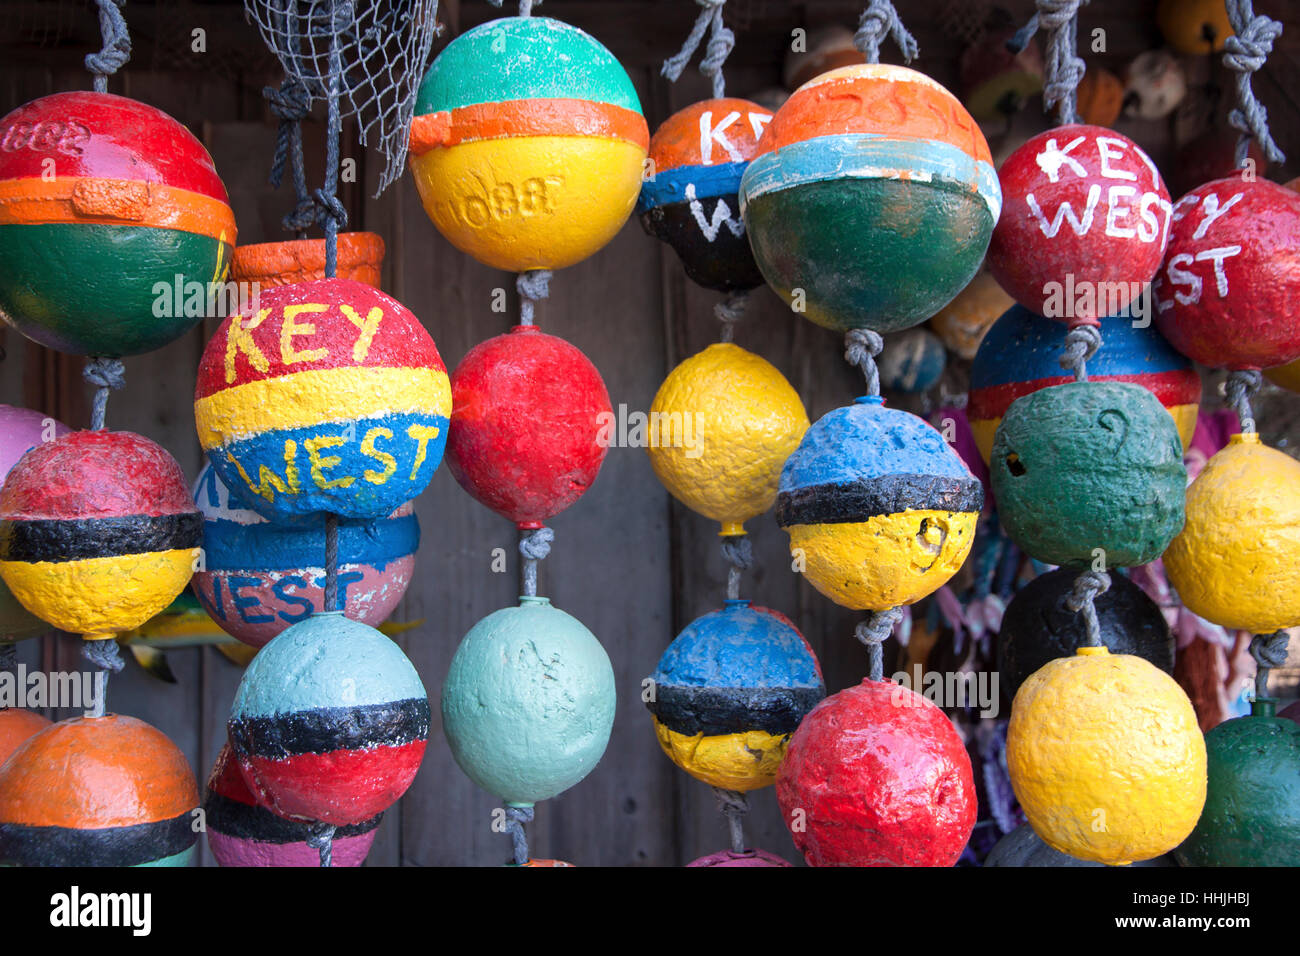 Key West words on colorful buoys. Stock Photo